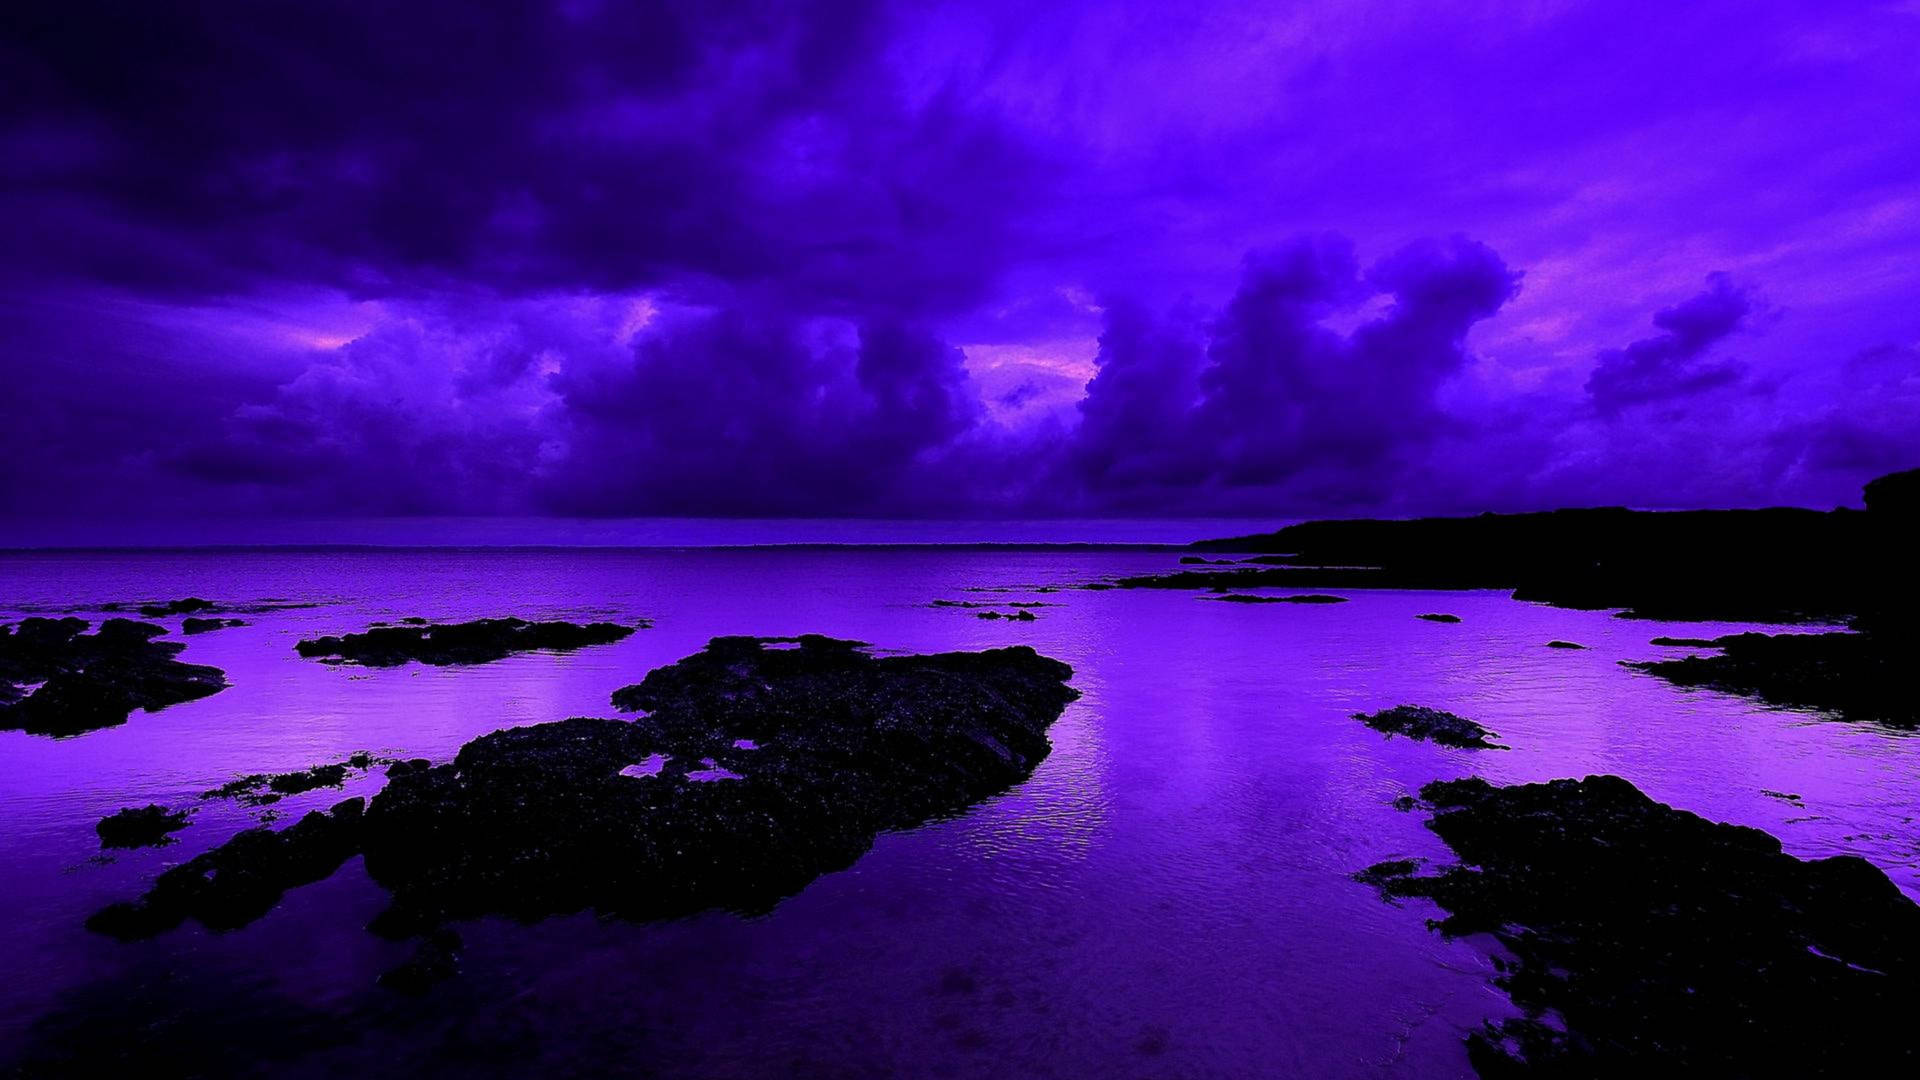 Violet Aesthetic Beach Night Sky